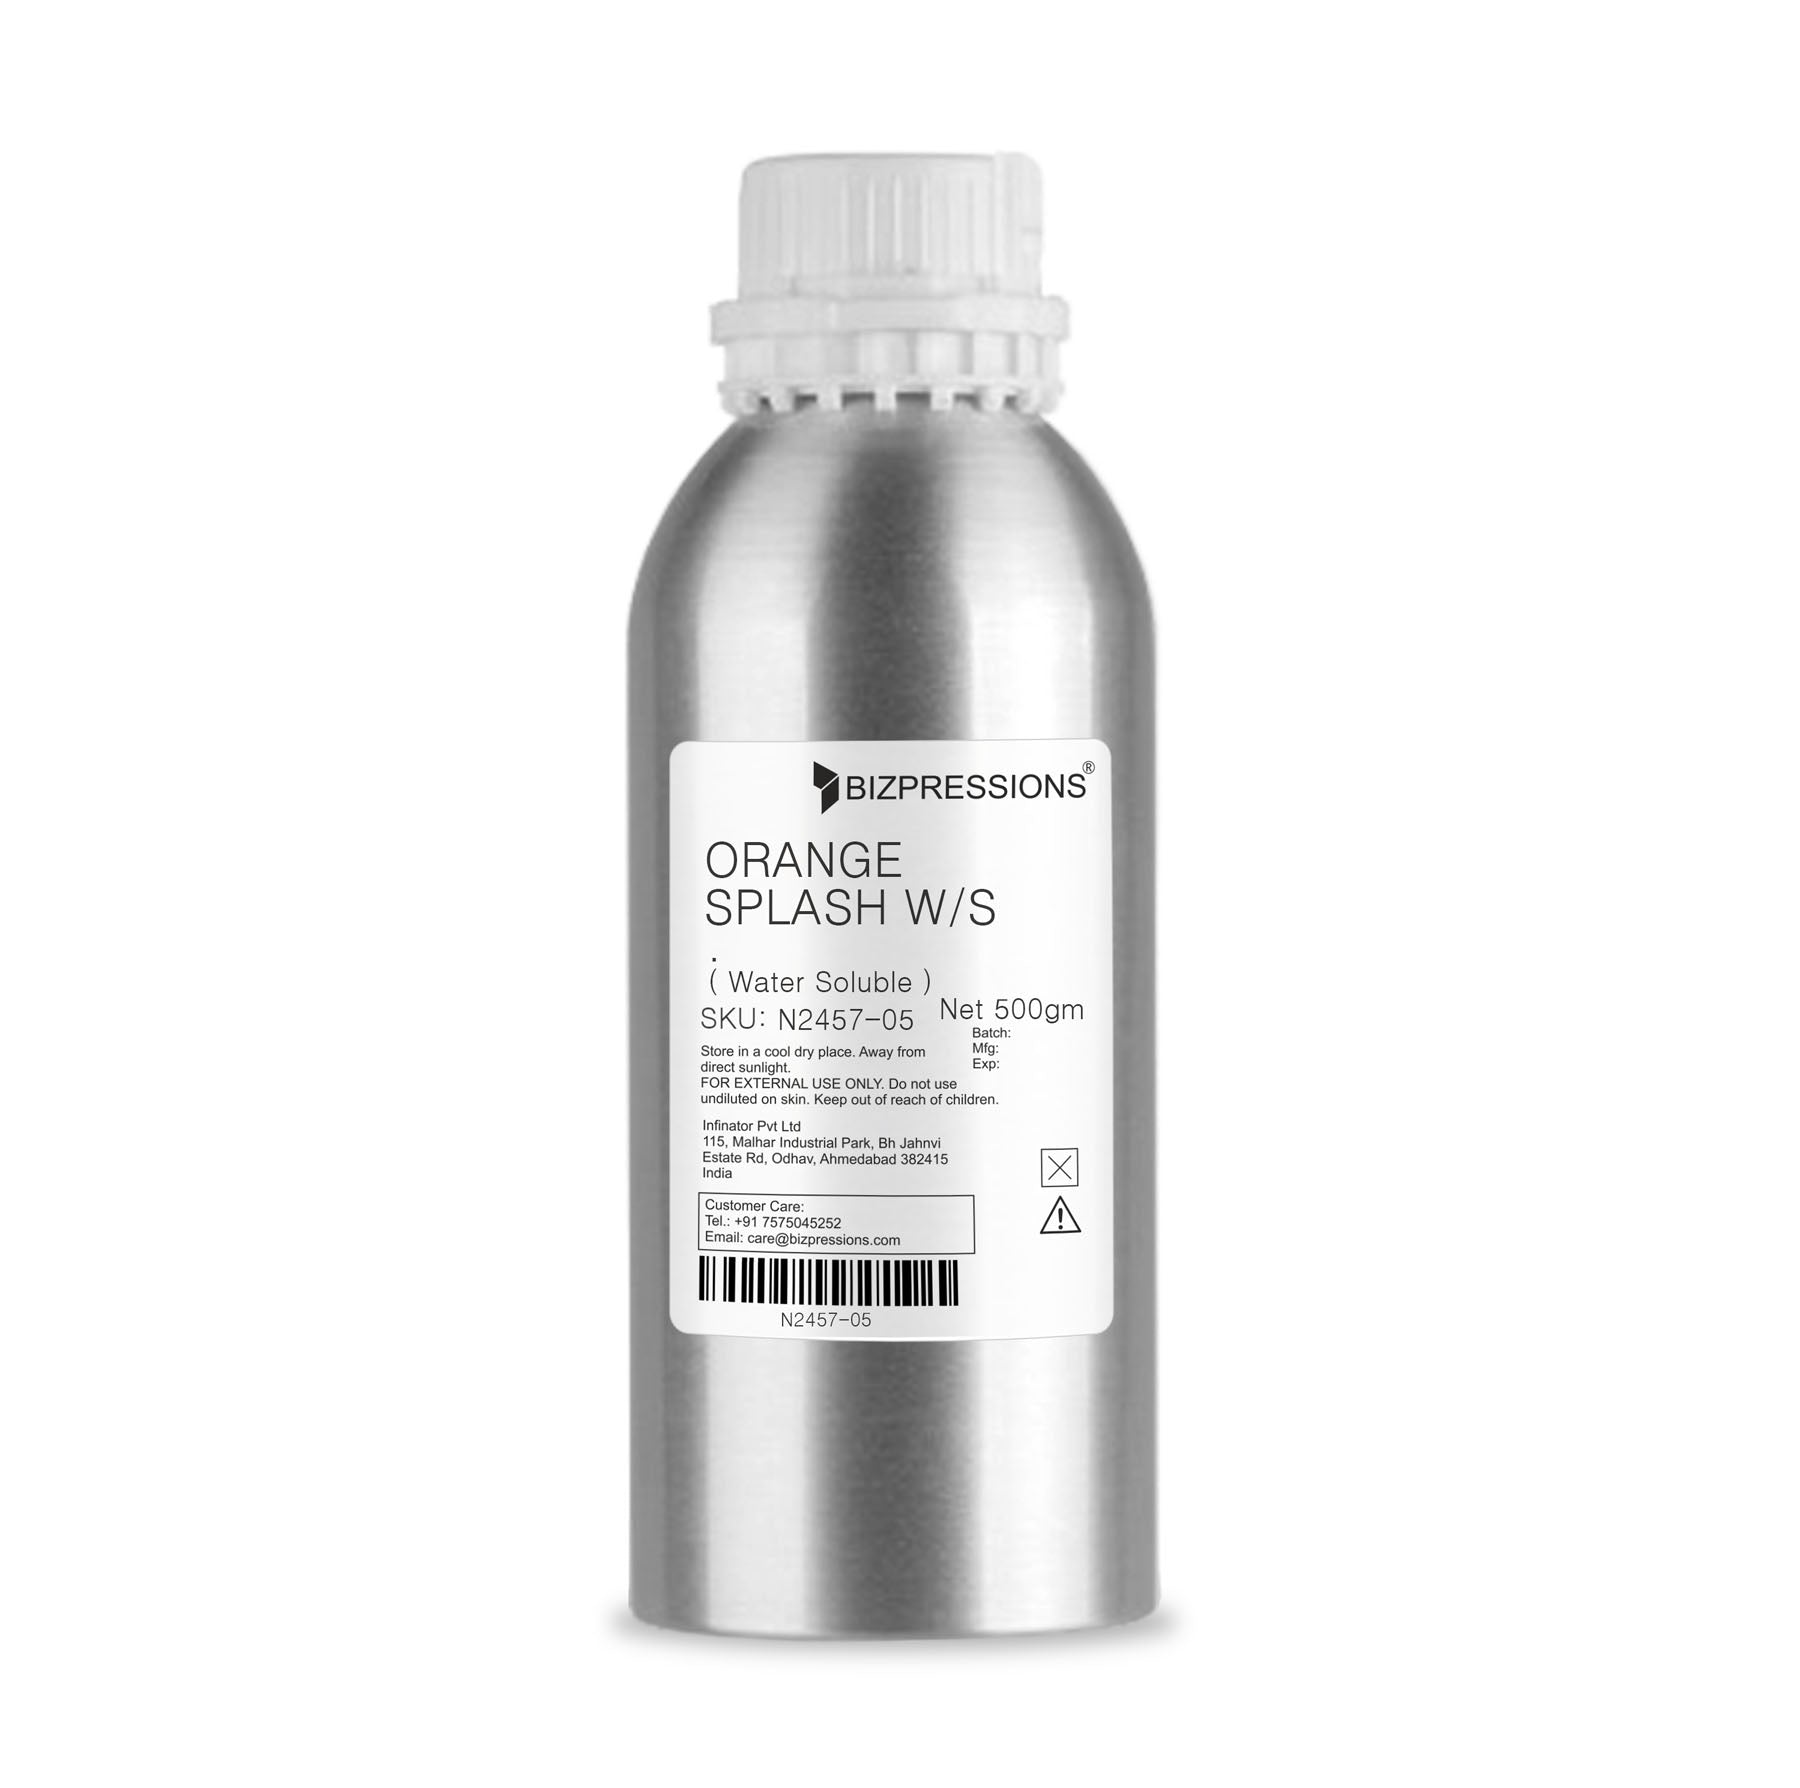 ORANGE SPLASH W/S - Fragrance ( Water Soluble ) - 500 gm